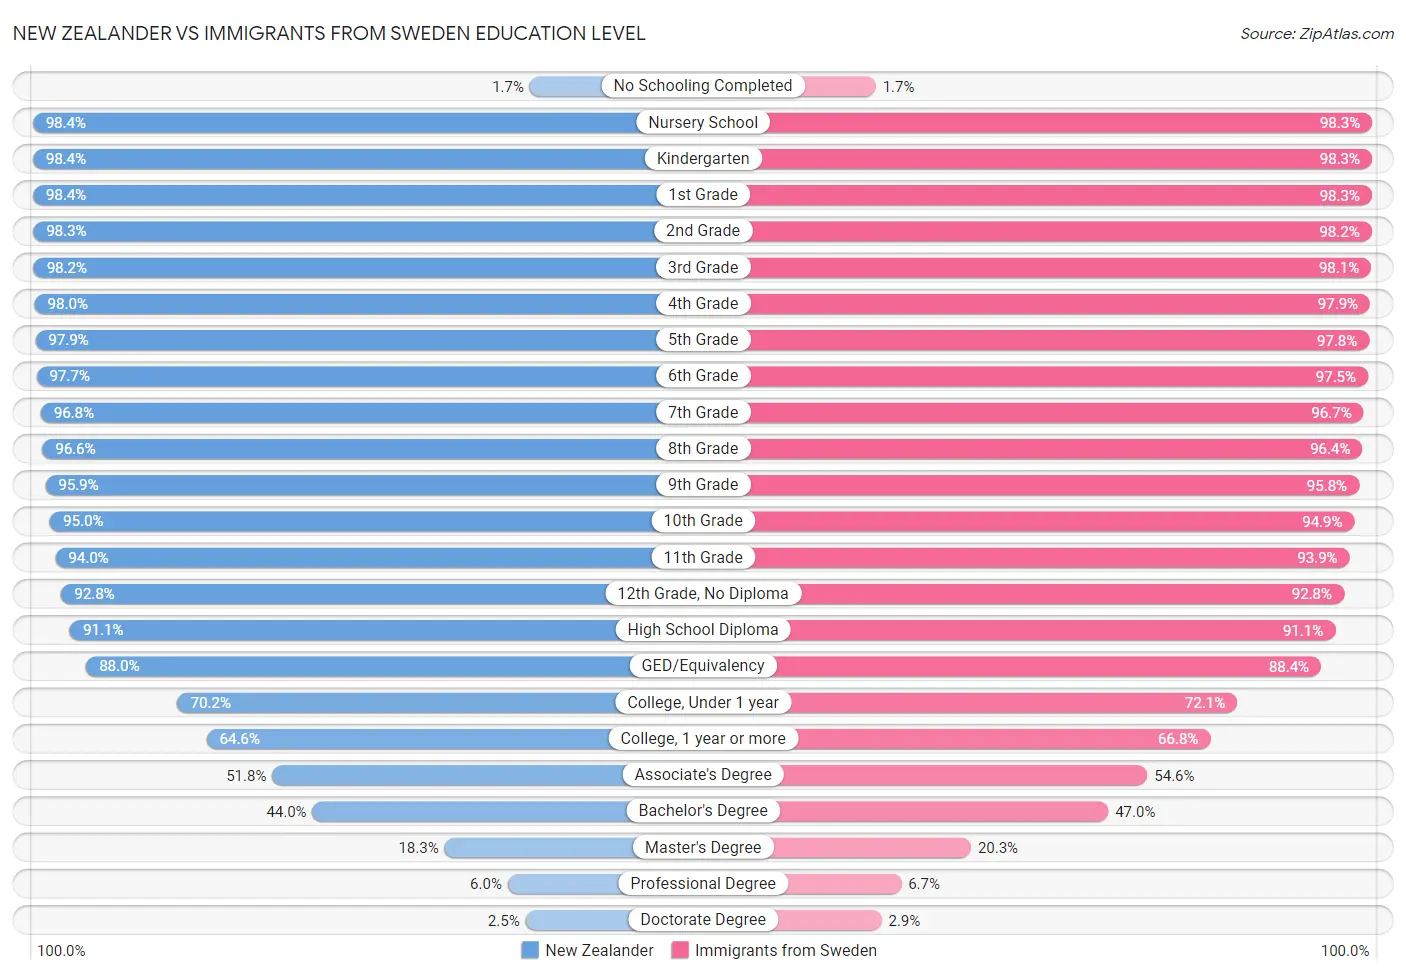 New Zealander vs Immigrants from Sweden Education Level